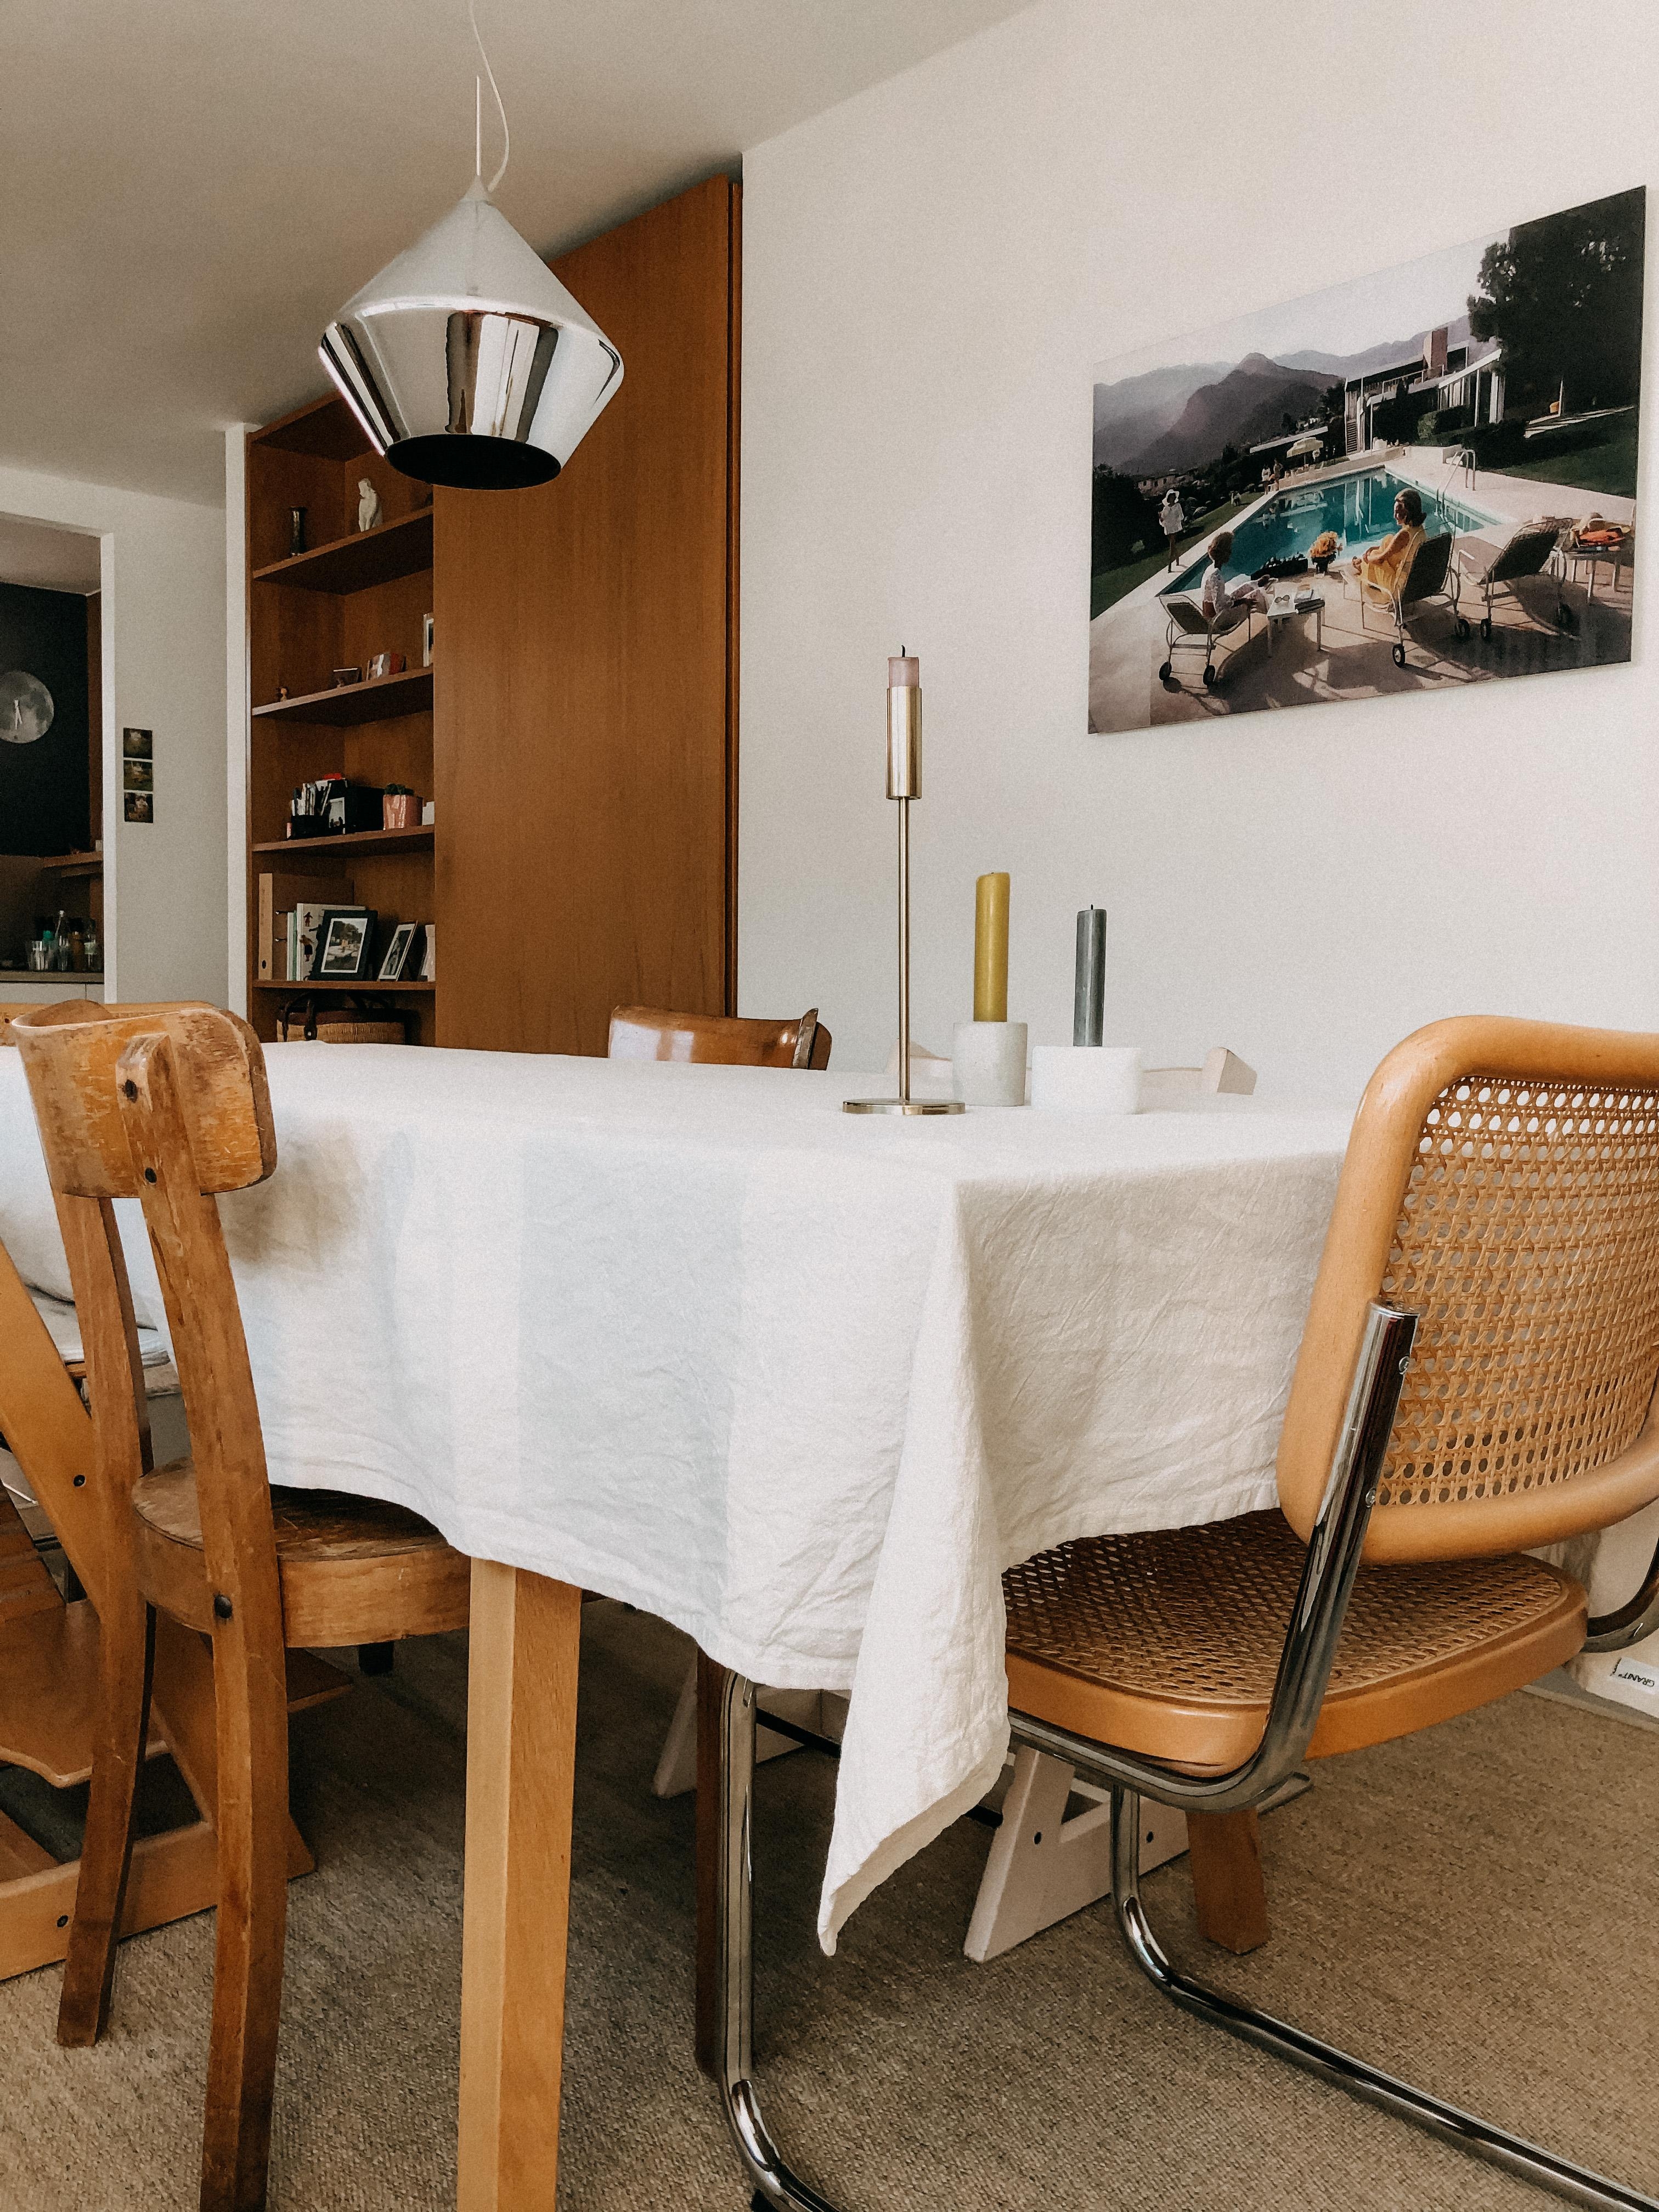 #diningroom #esszimmer #californiadreaming #thonet #woodlover #builtincloset #einbauschrank